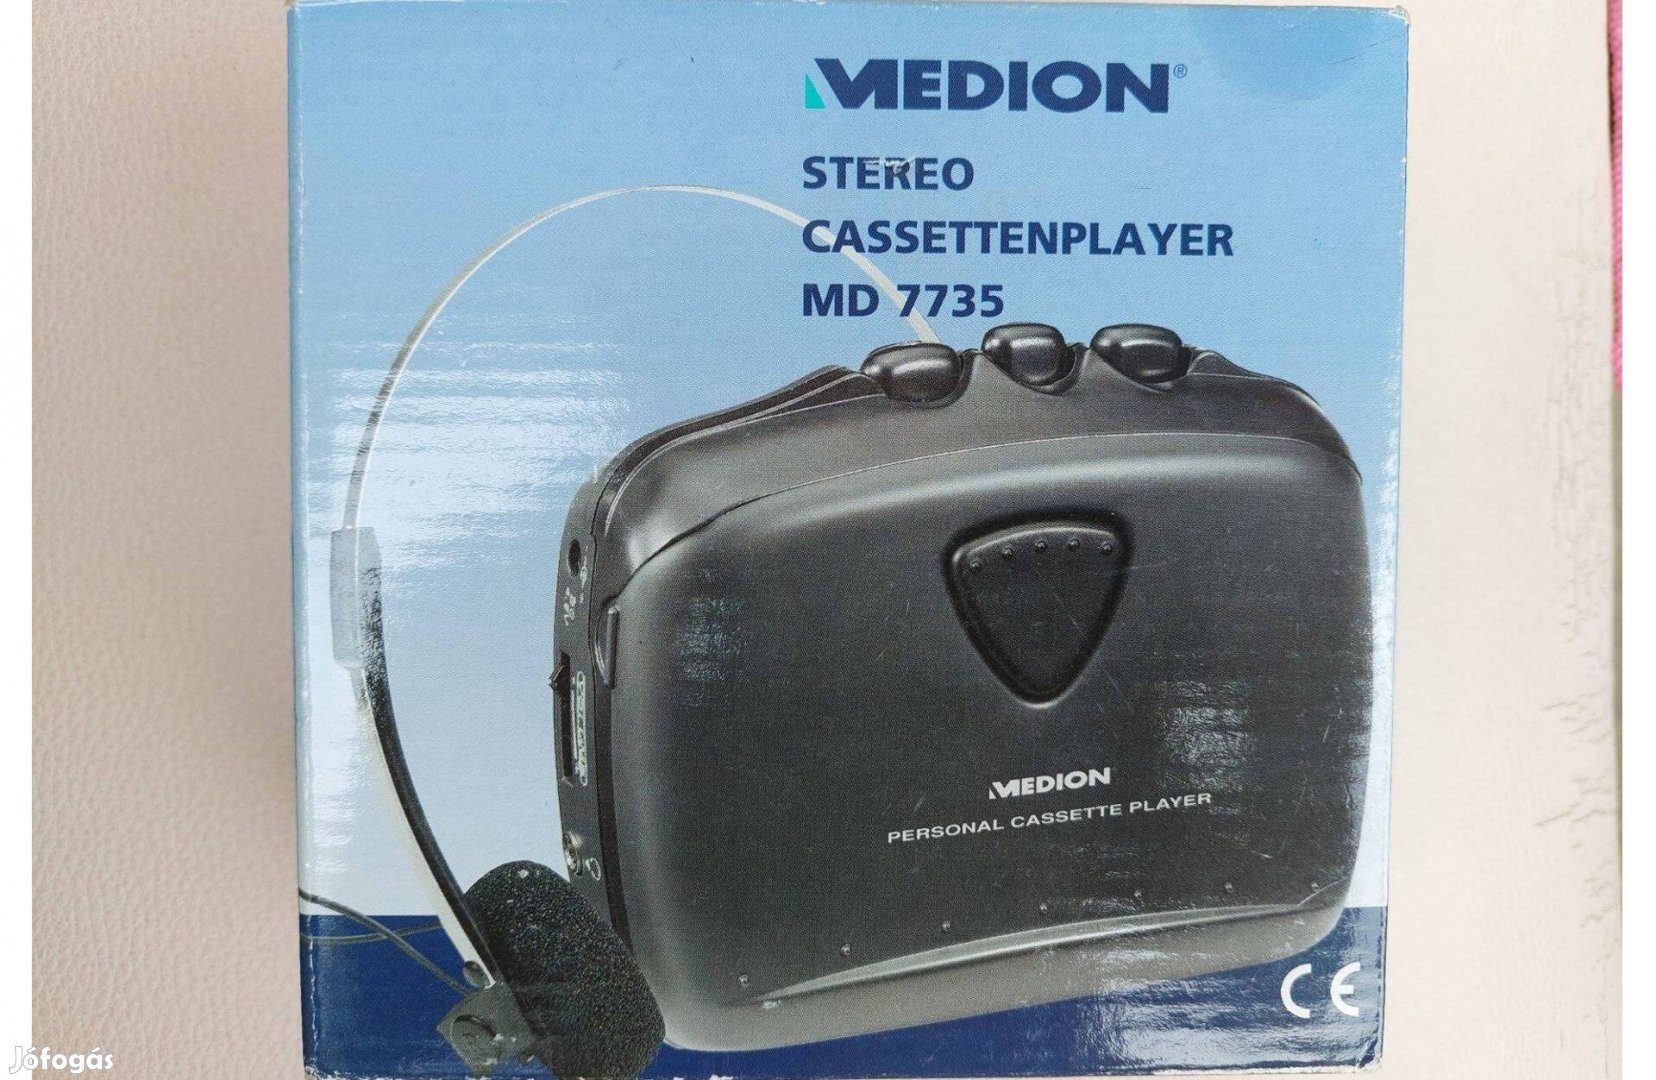 Medion MD 7735 STEREO C Assette Player Sztereó Walkman Kazettás MAGNÓ